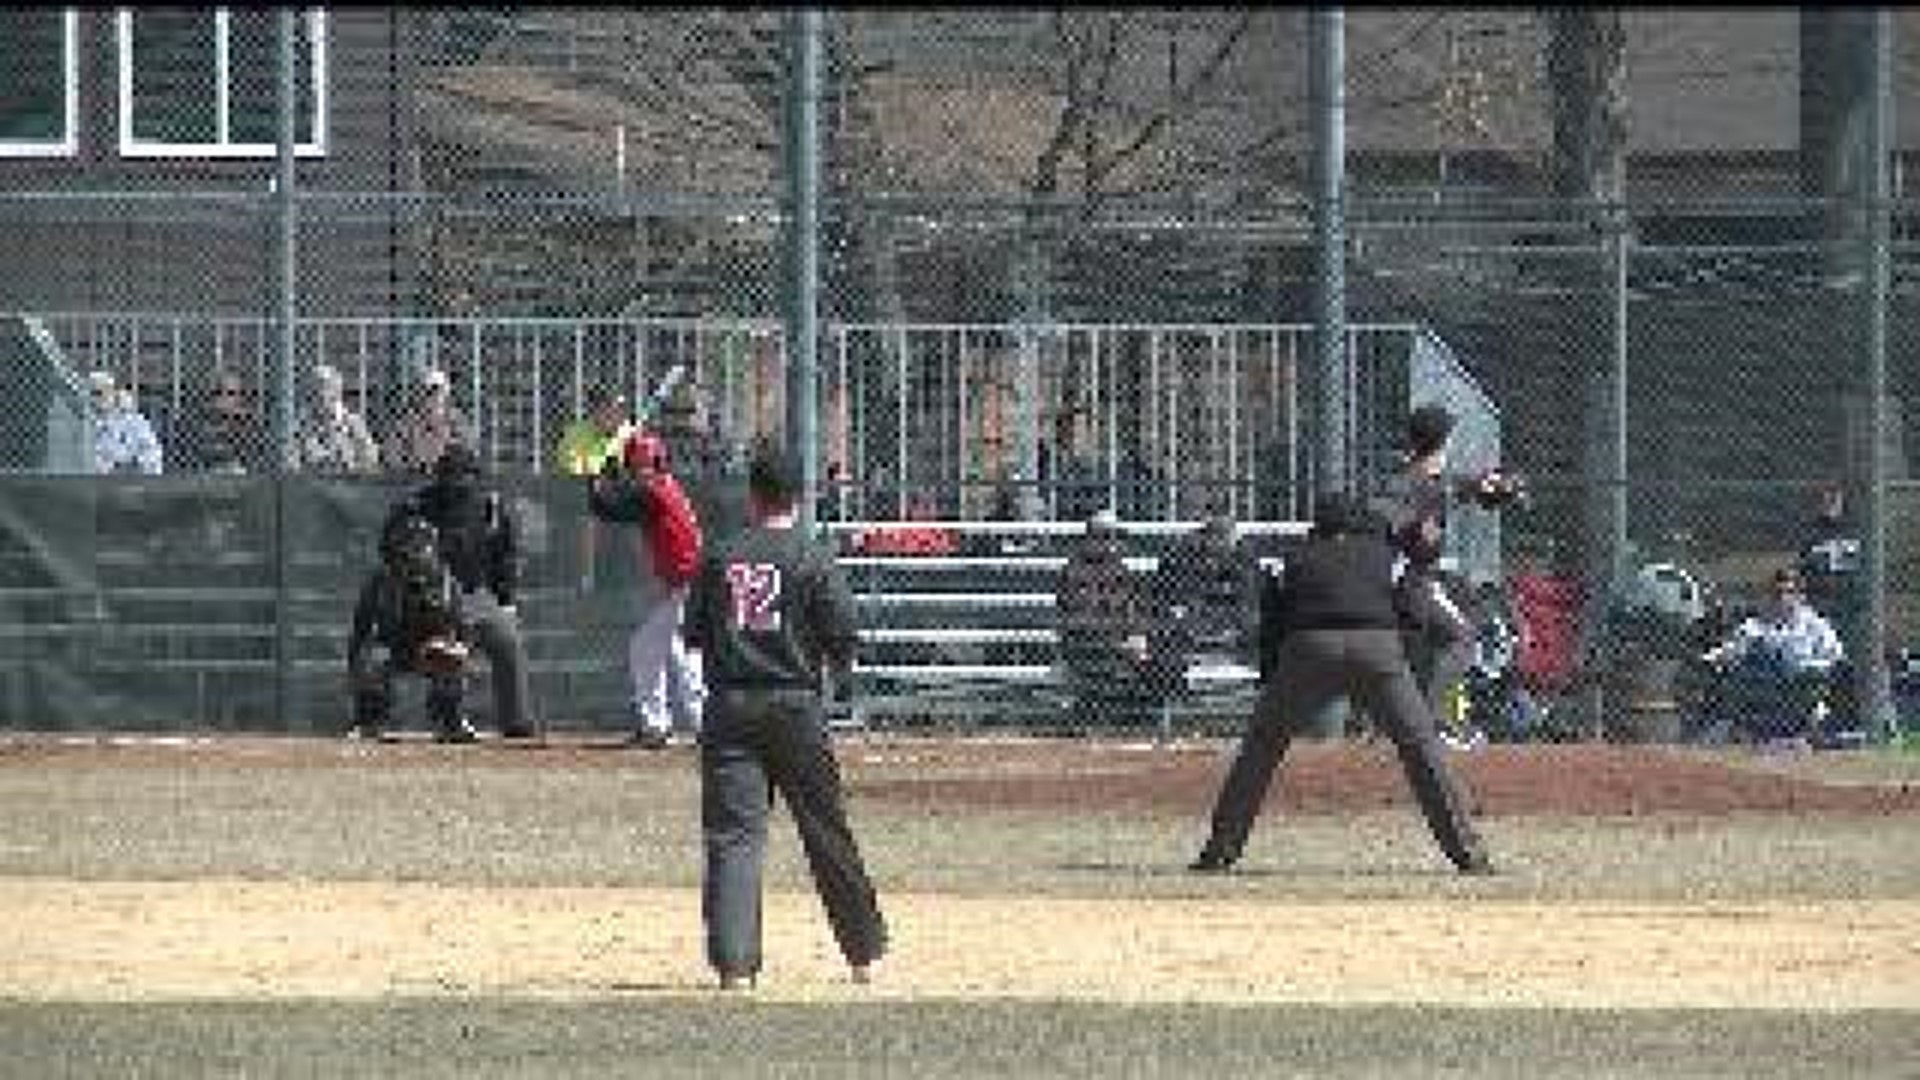 United Township Baseball